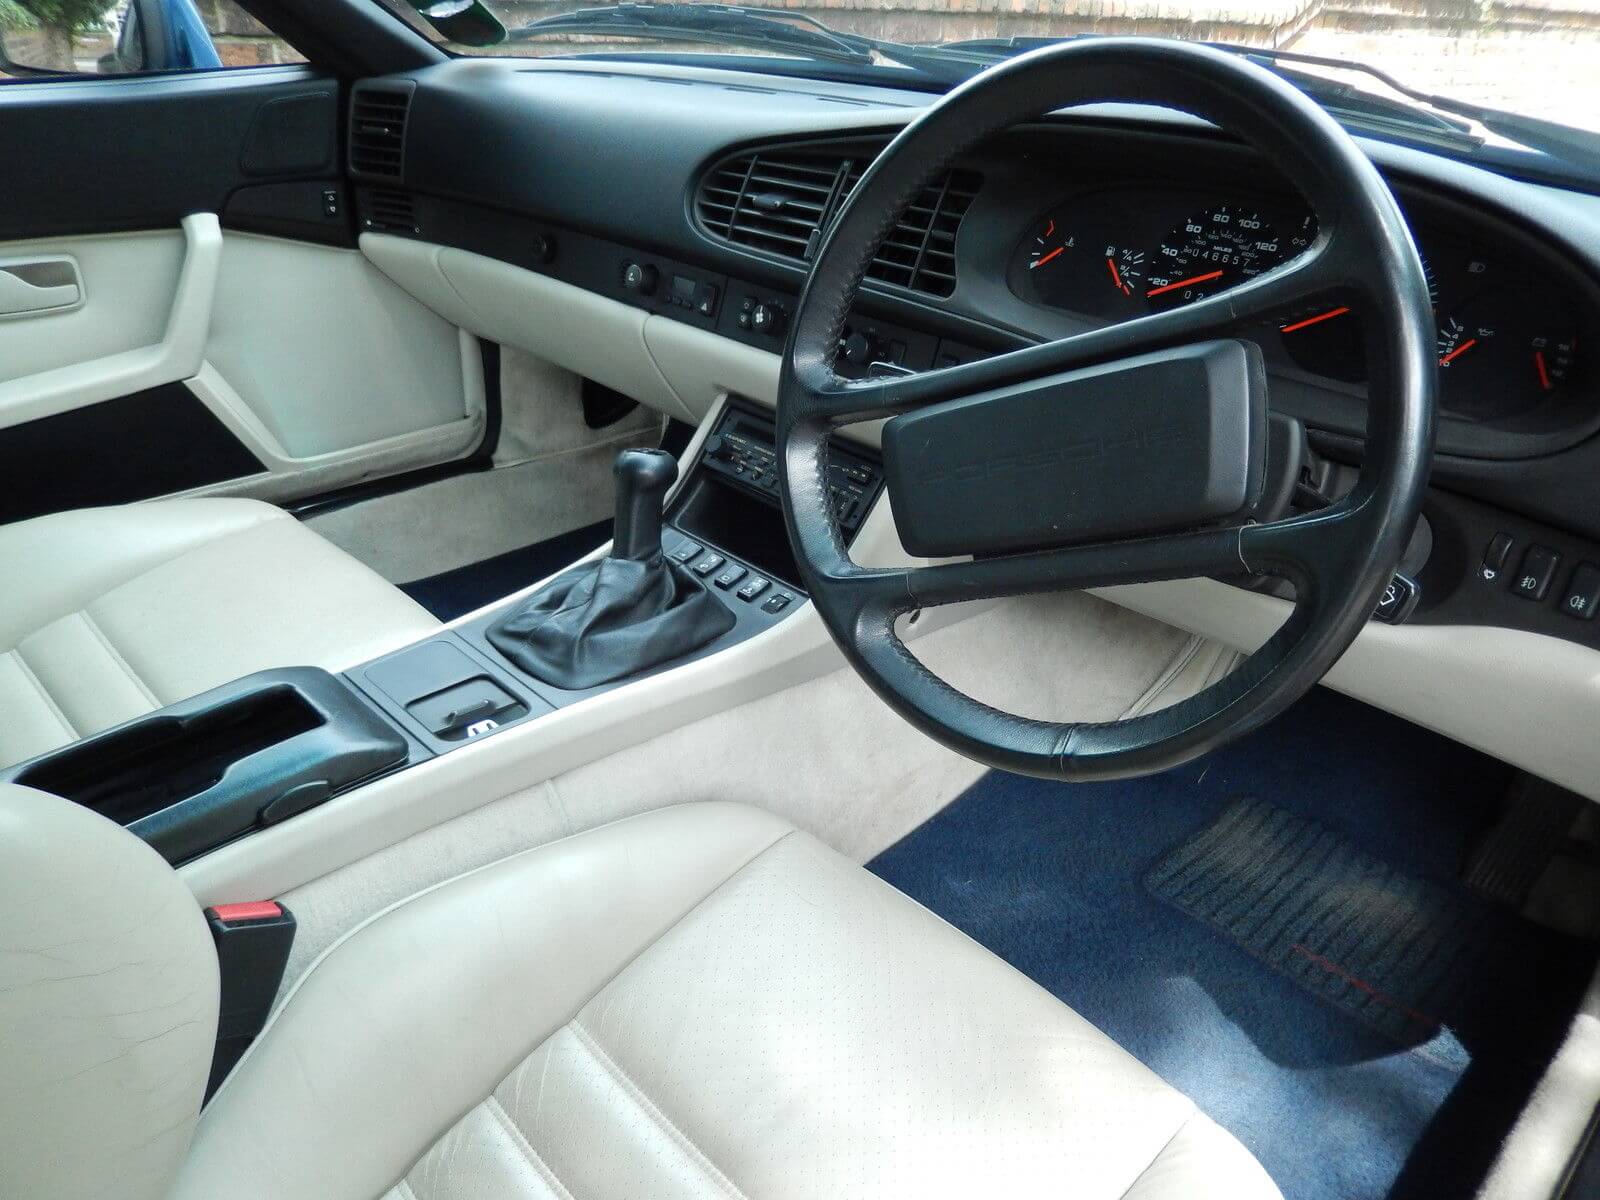 1989 Porsche 944 S2 interior.